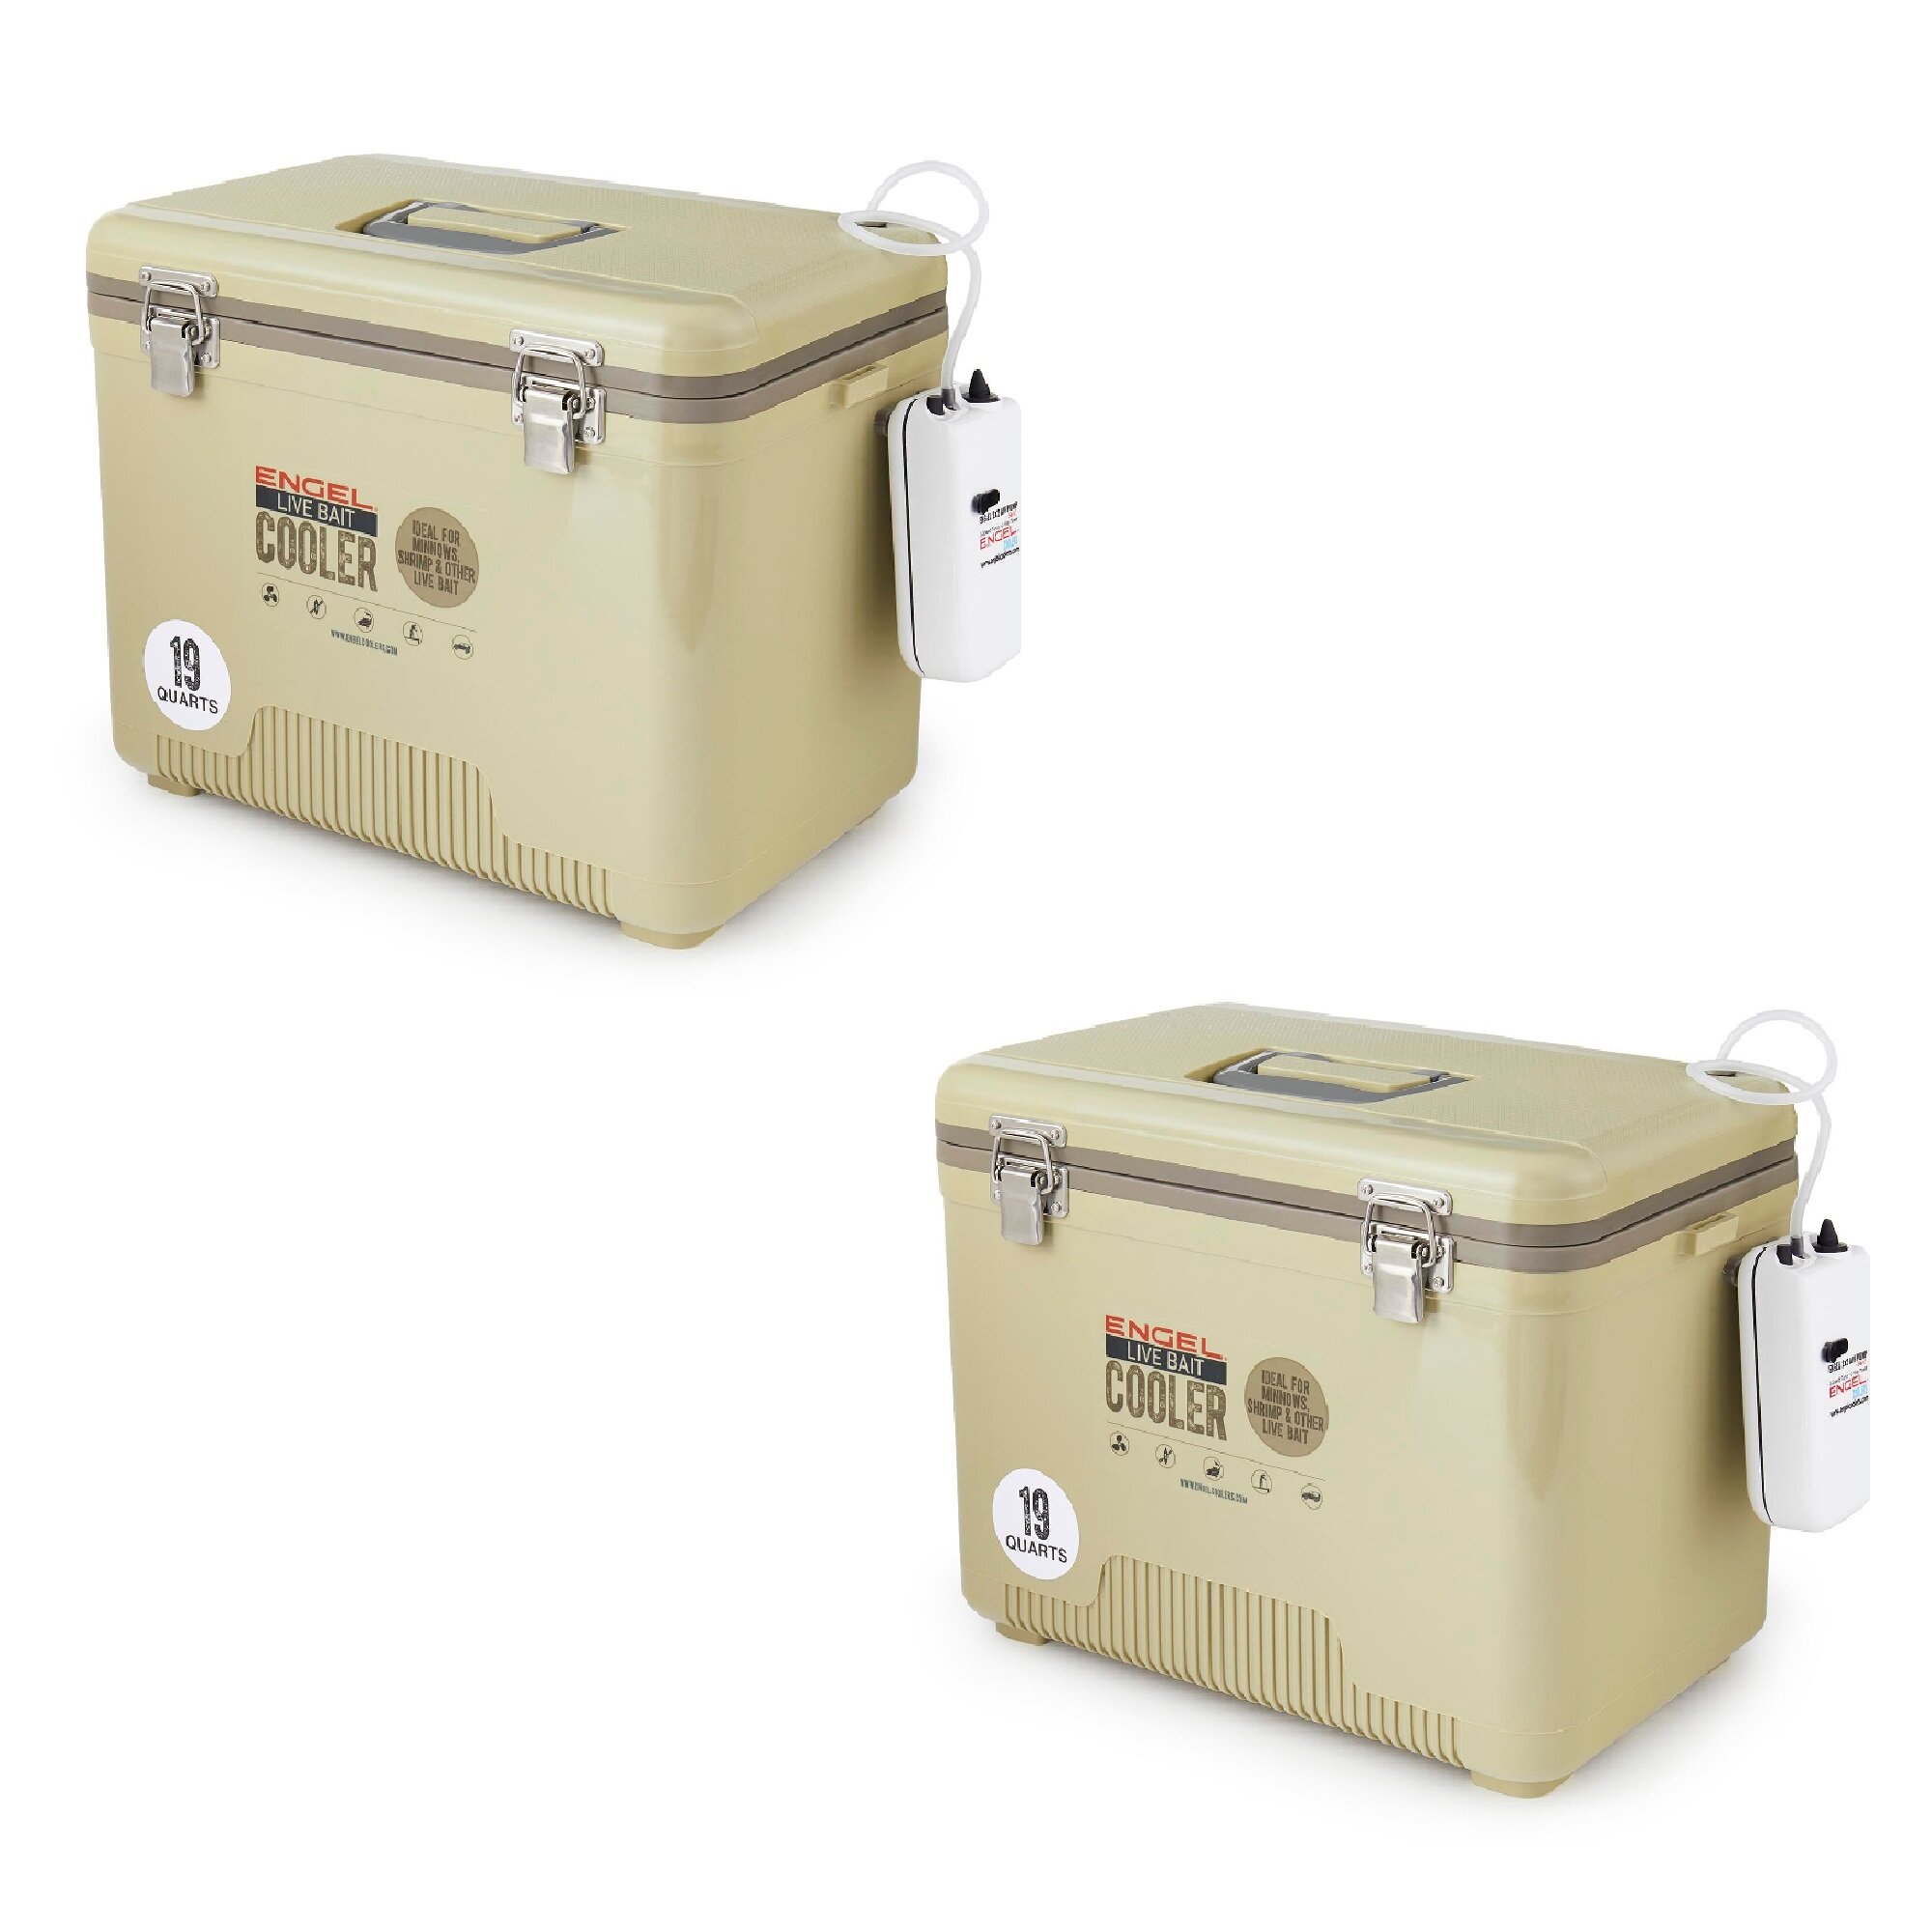 Engel 19 Quart 32 Can Leak Proof Odor Resistant Insulated Cooler Drybox, Black